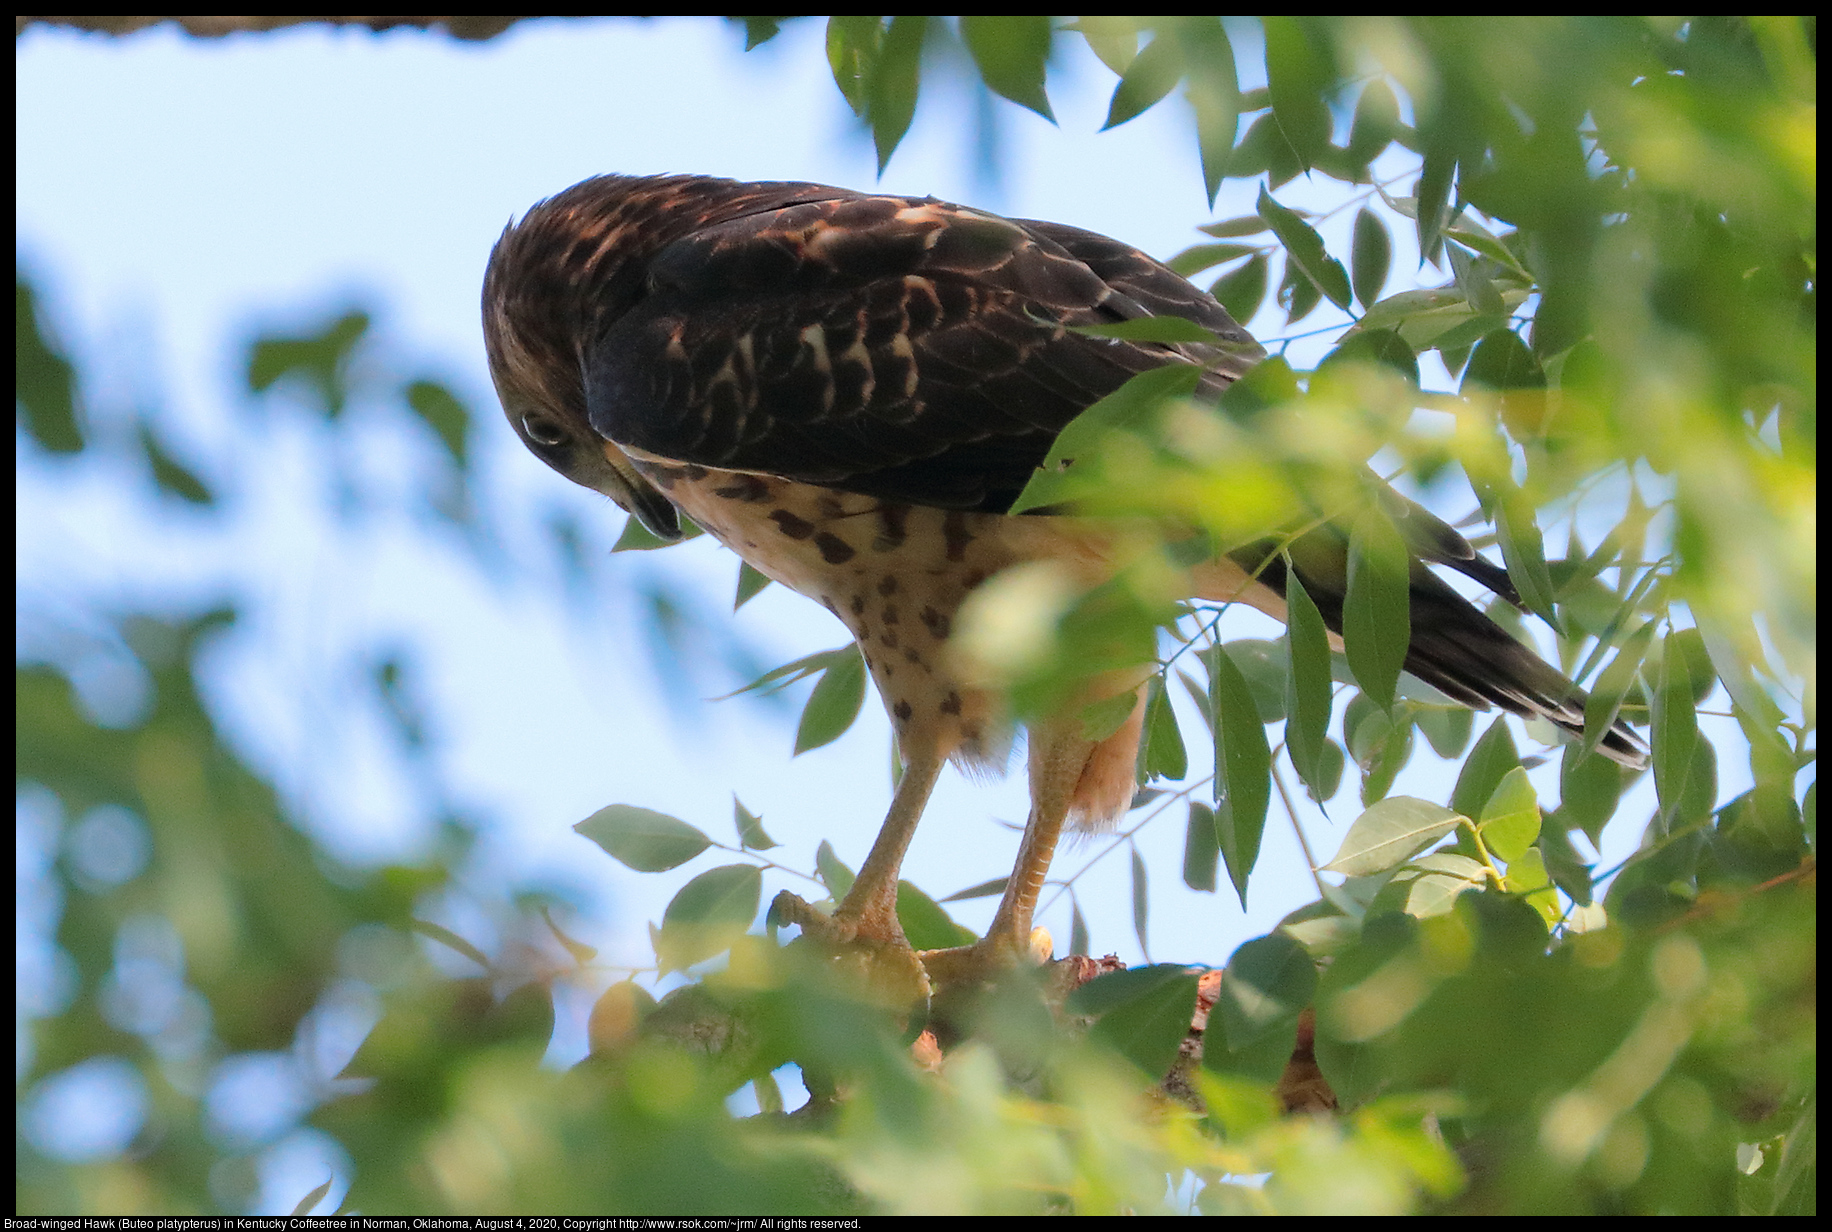 Broad-winged Hawk (Buteo platypterus) in Kentucky Coffeetree in Norman, Oklahoma, August 4, 2020